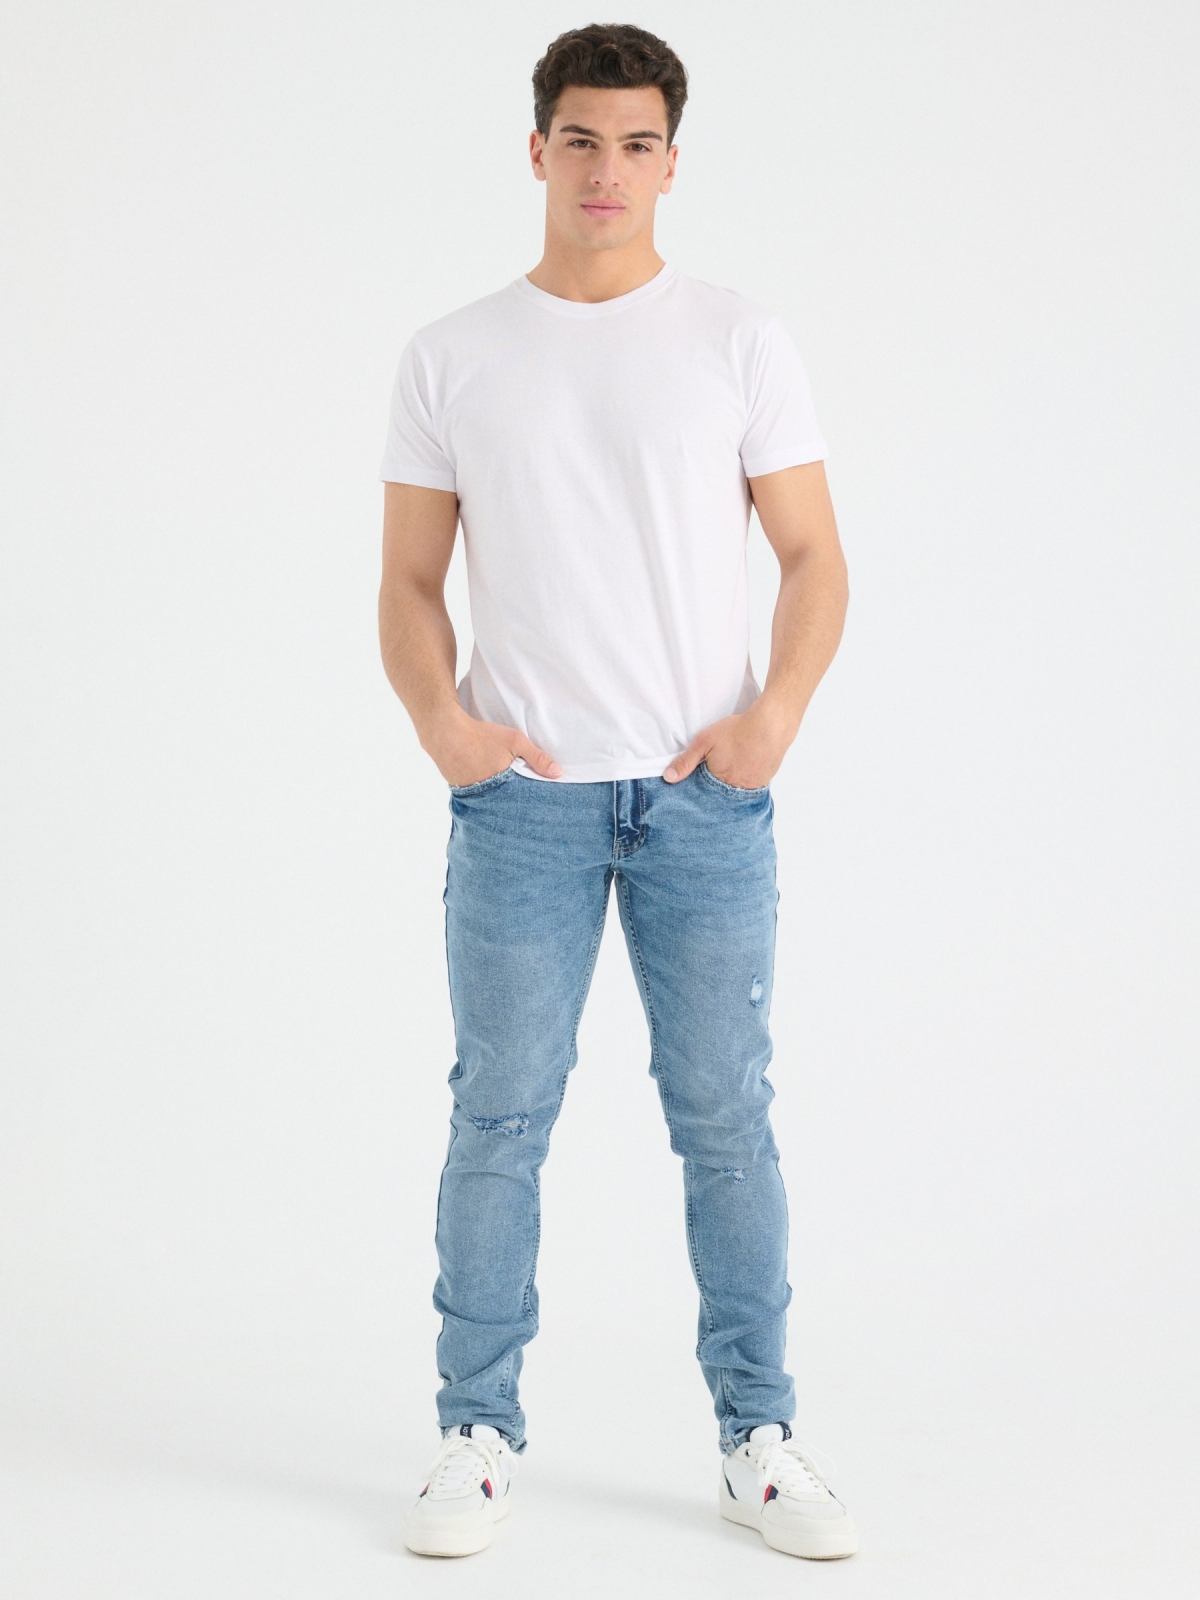 Jeans slim rasgados azul vista geral frontal